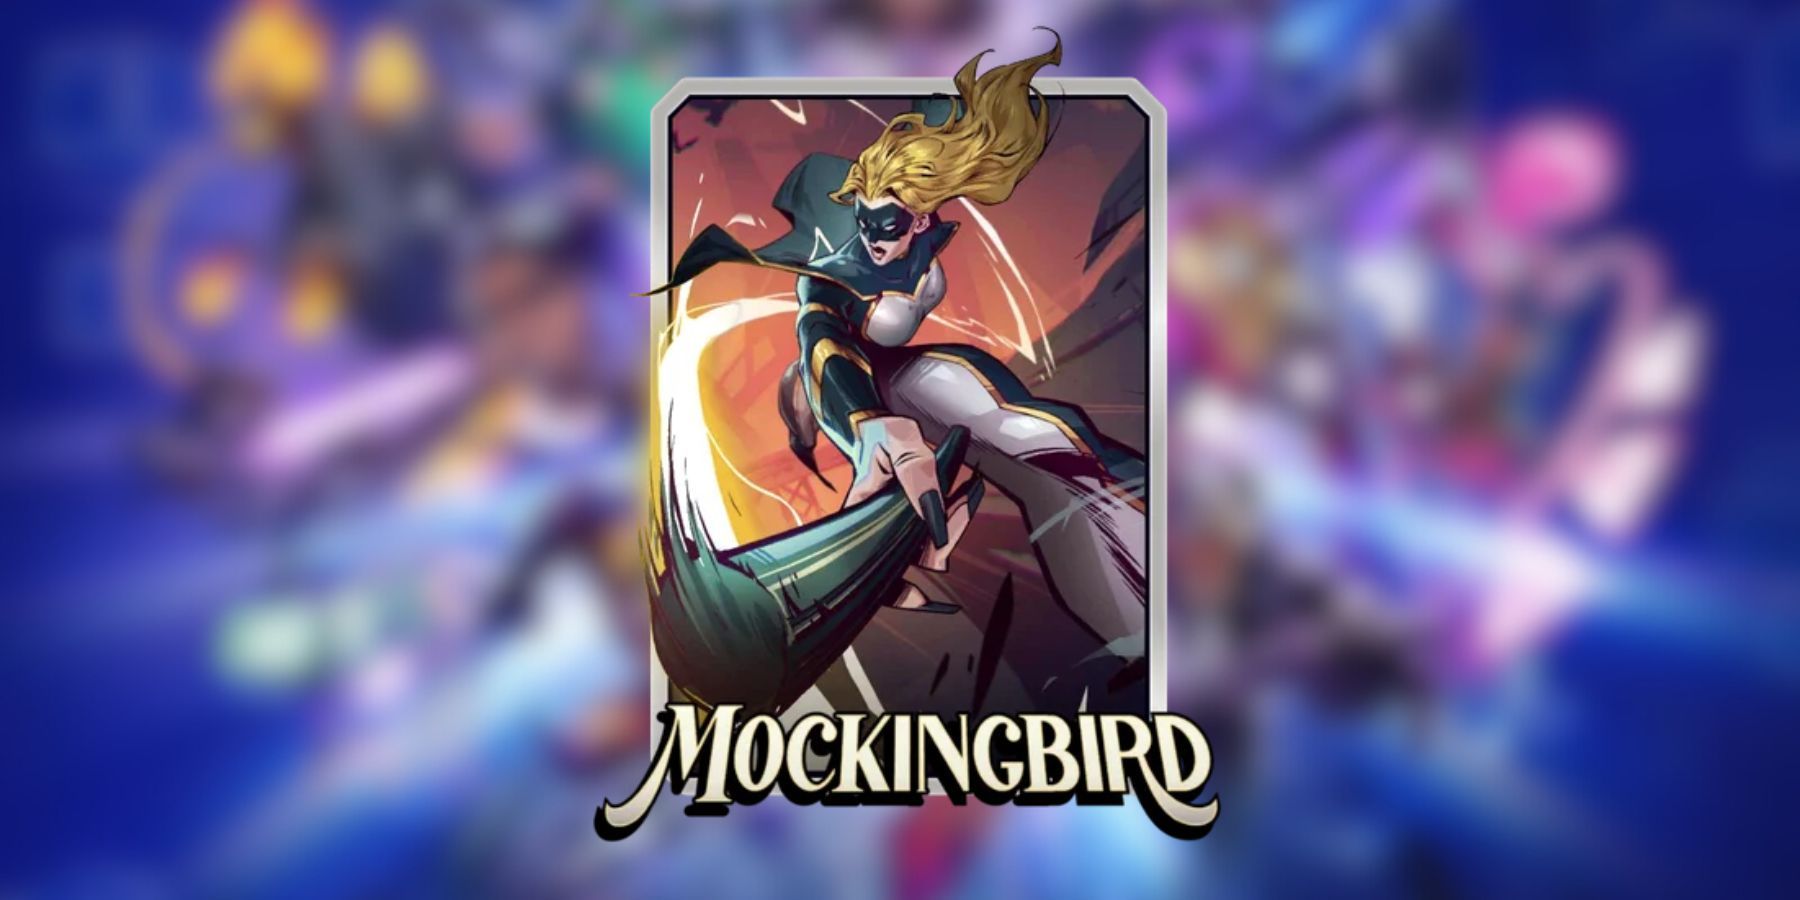 a mockingbird card variant in marvel snap.